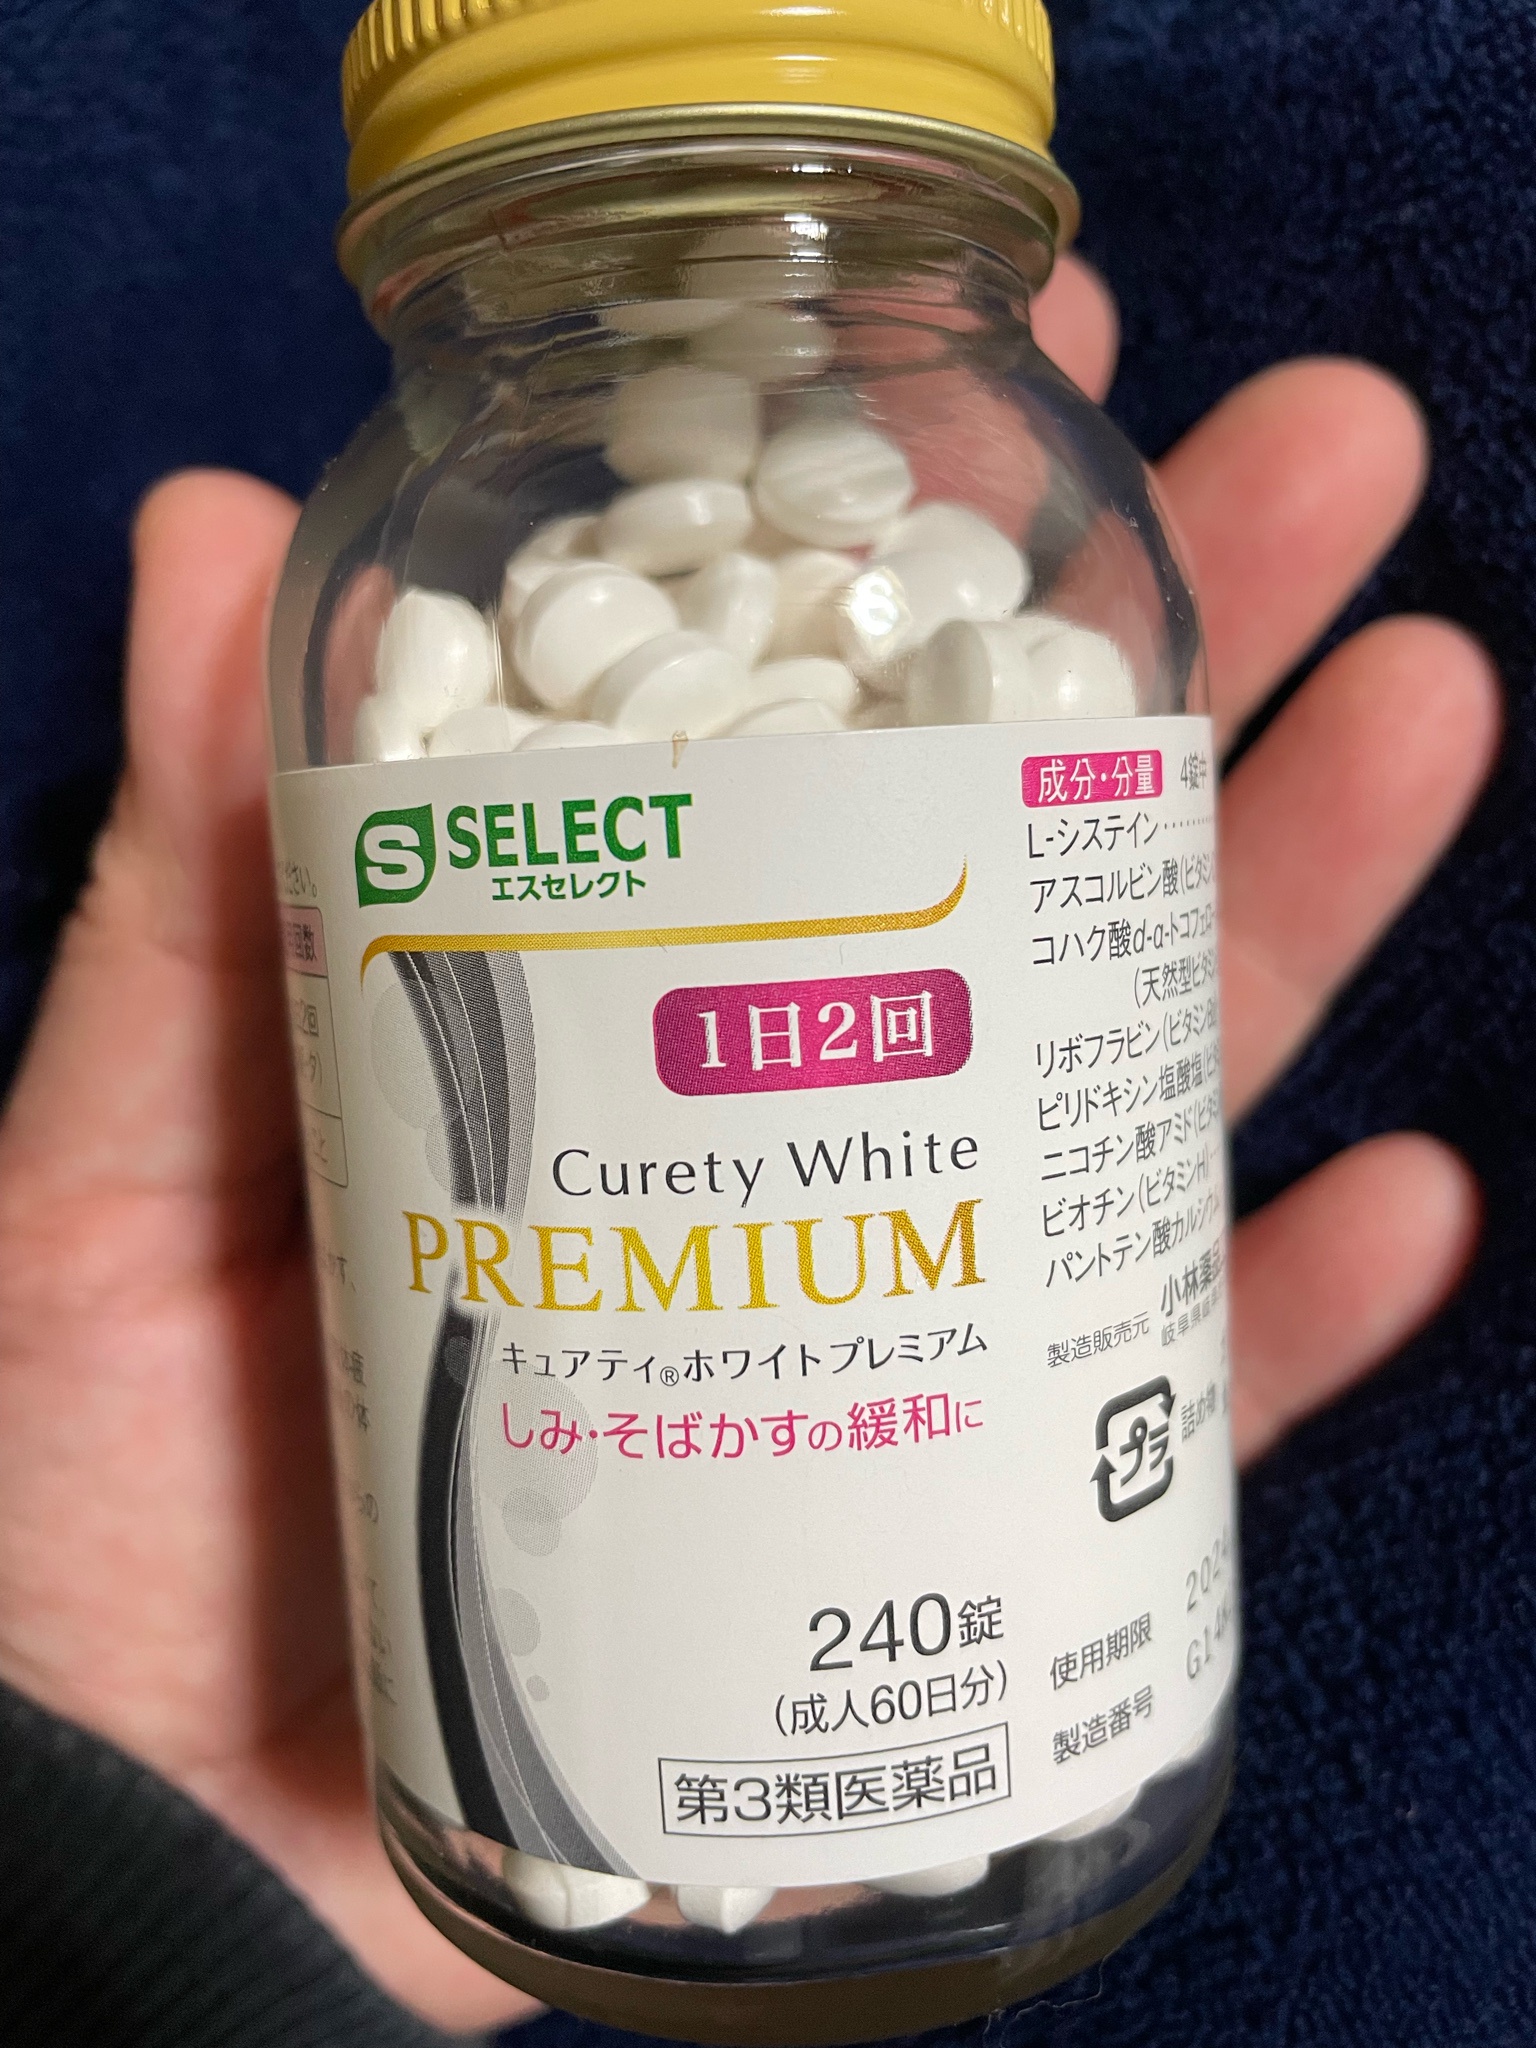 S SELECT(エスセレクト) / キュアティホワイト(医薬品)の口コミ写真 